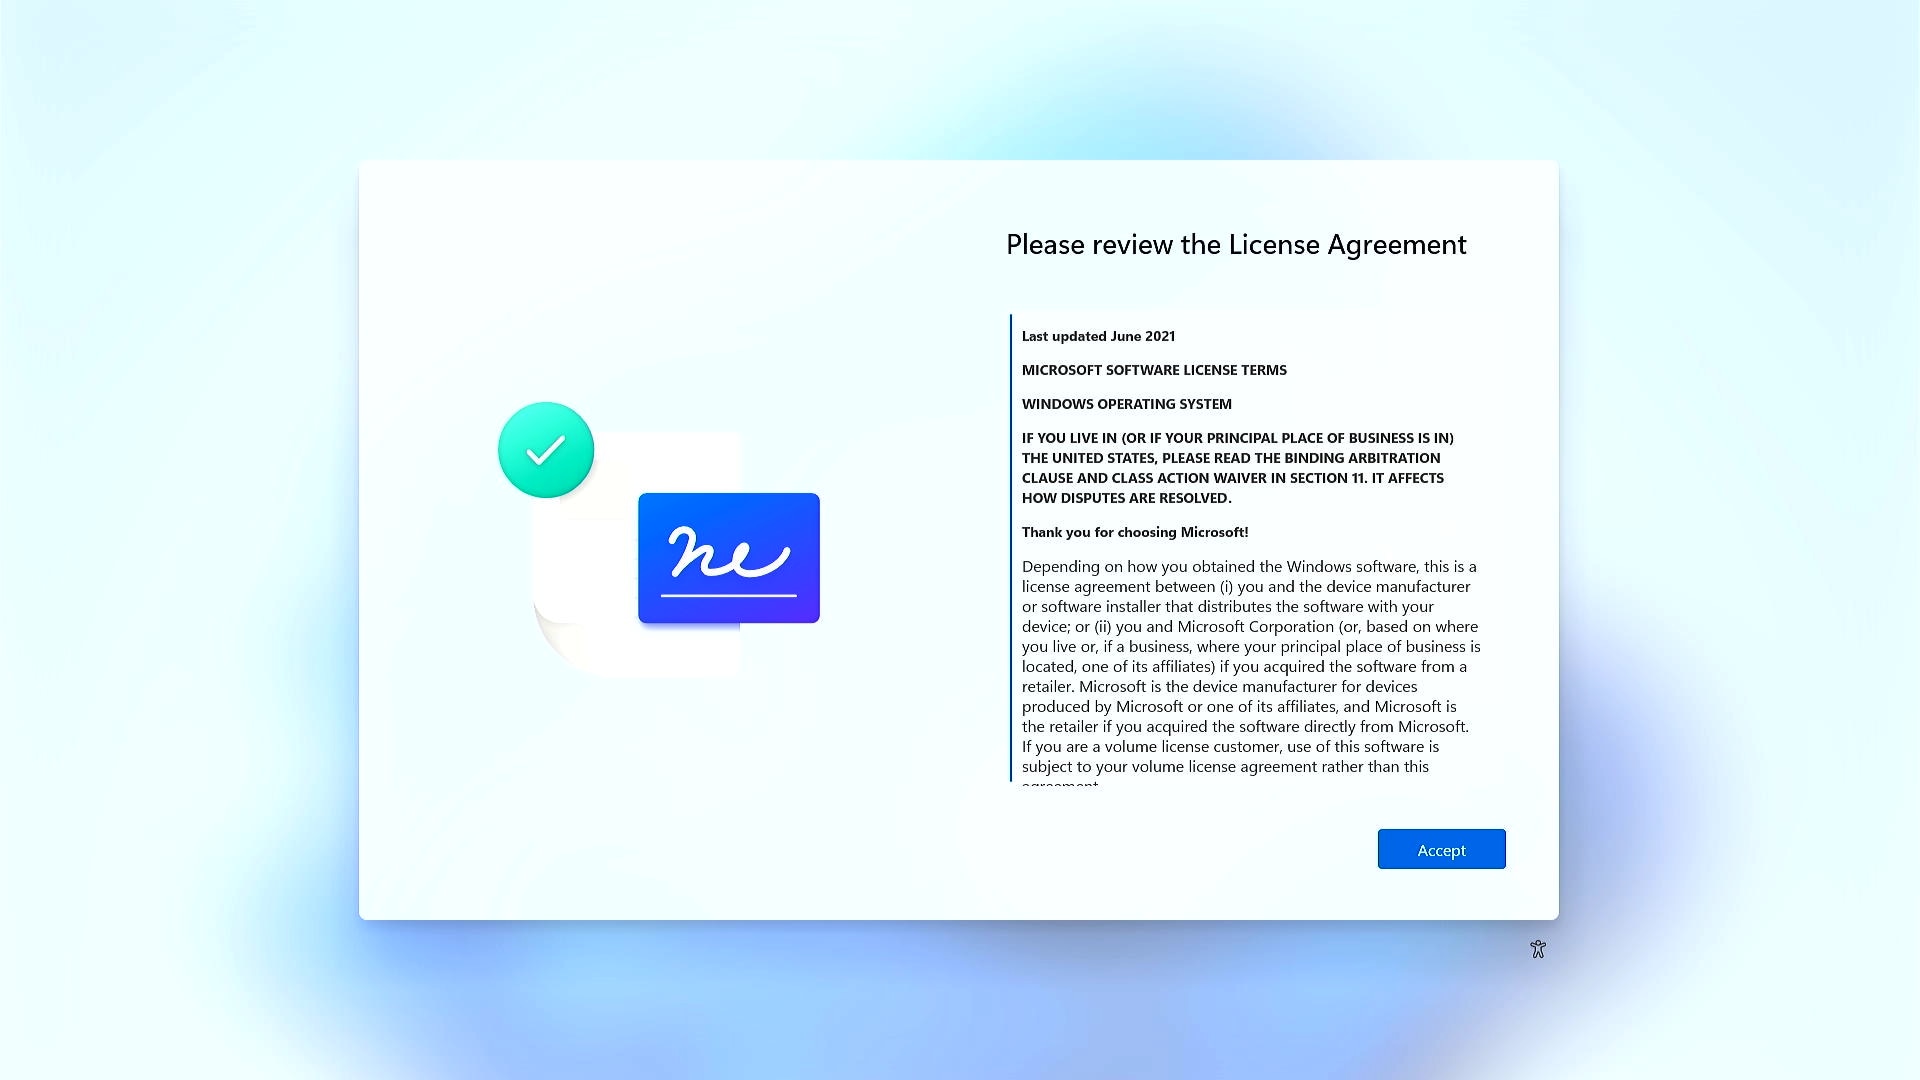 License agreement screen shown during Windows setup